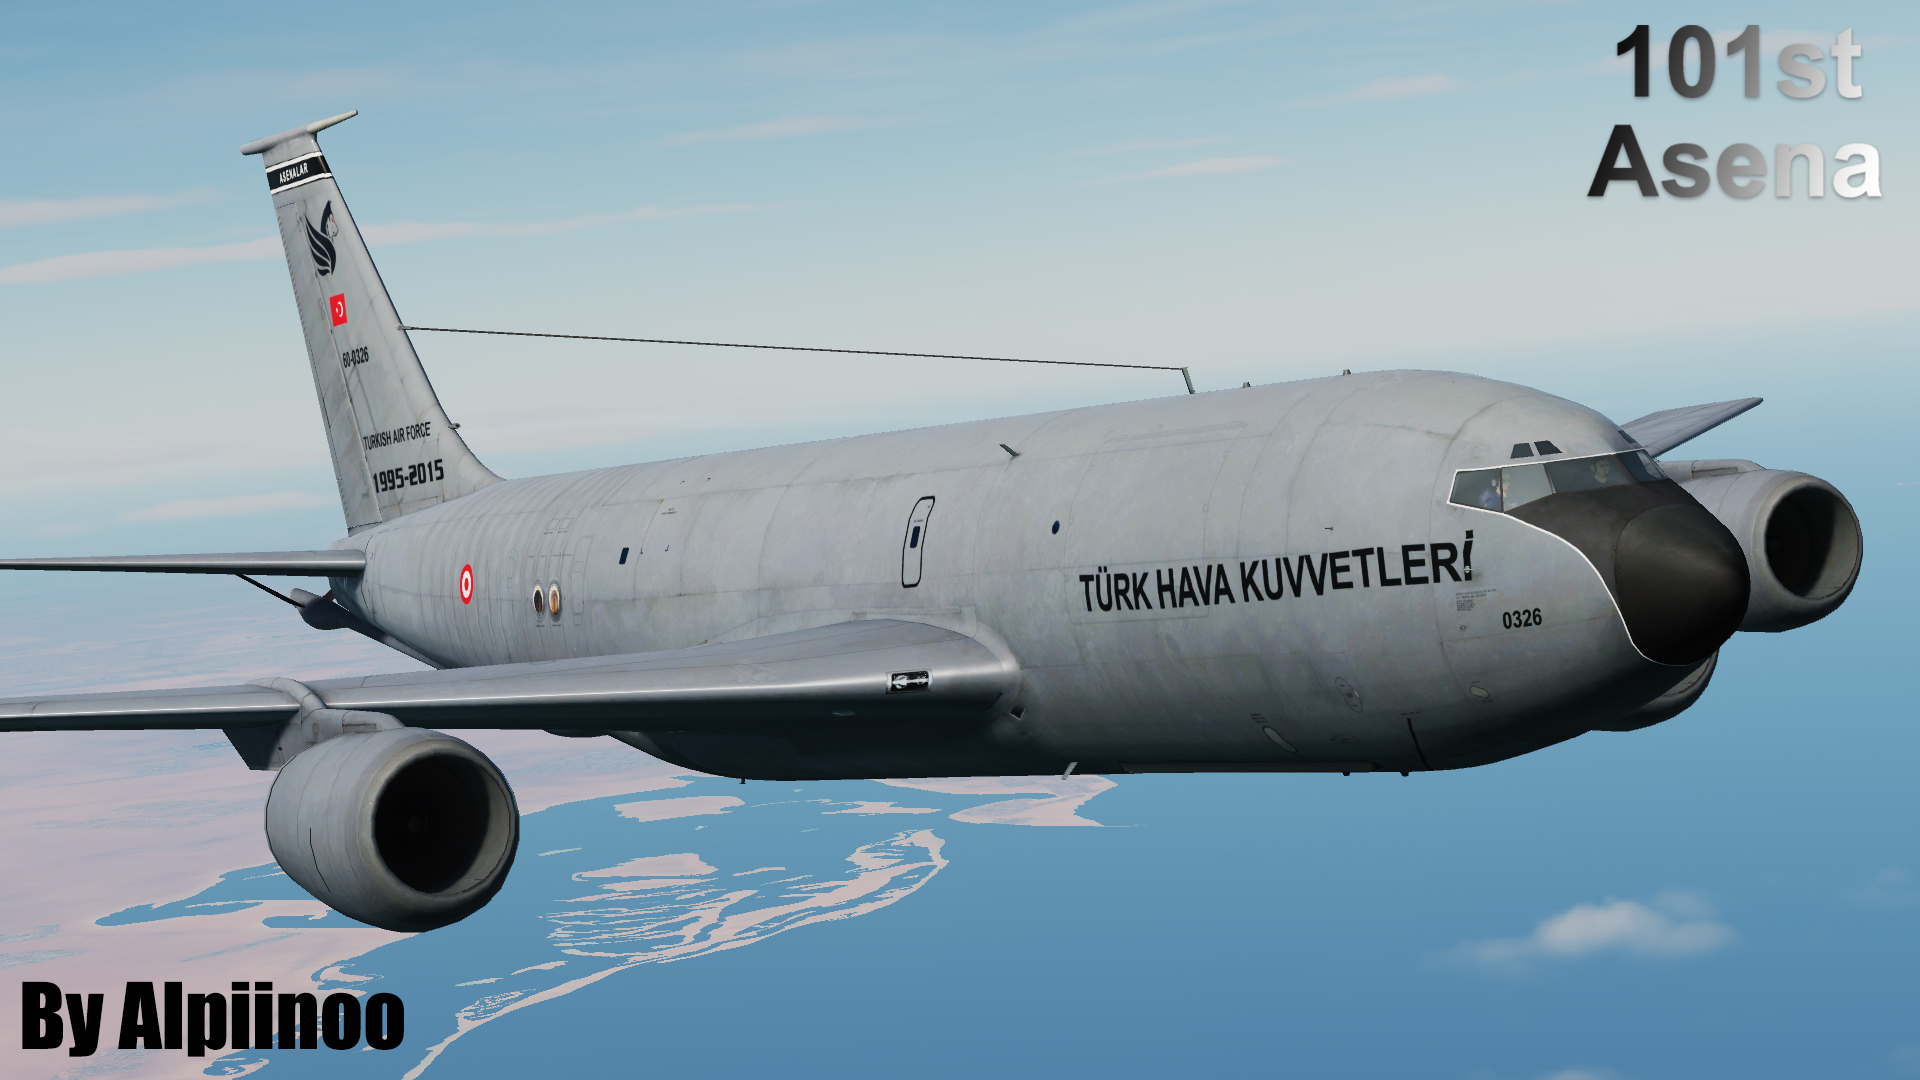 Turkish Air Force (TurAf) KC-135R 101st Asena 60-0326 [1995-2015] 4K